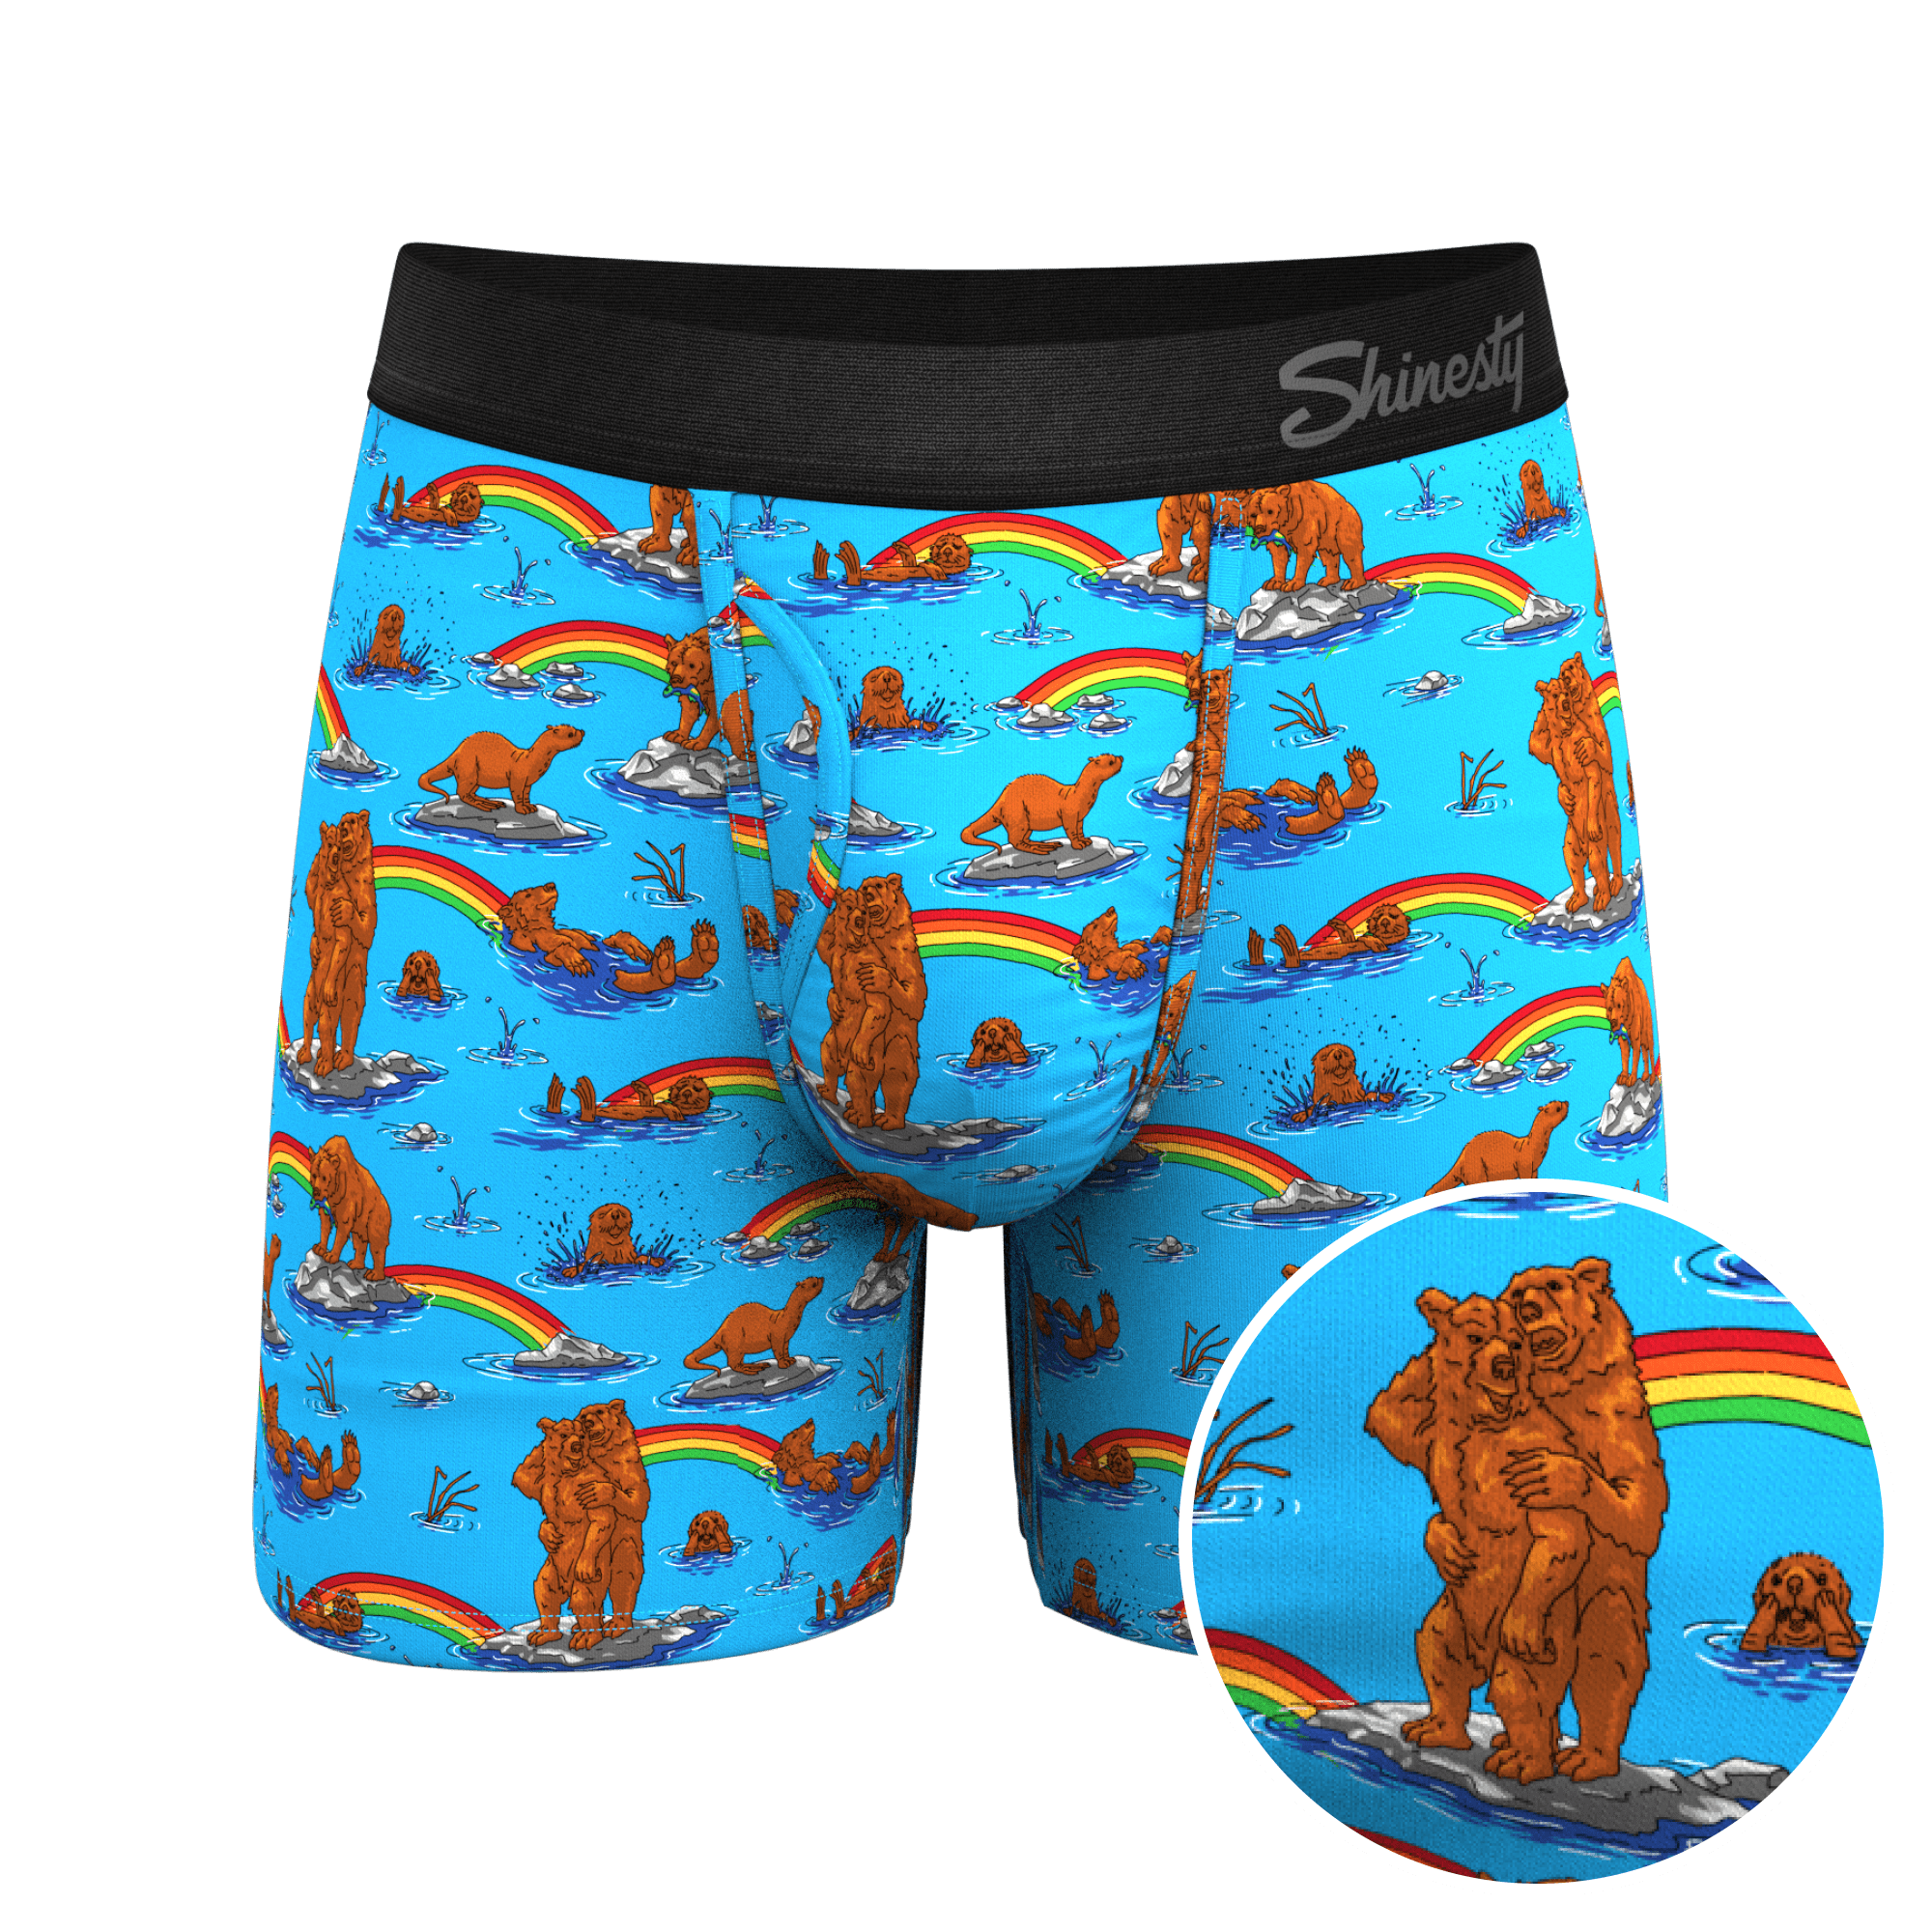 The Bear - Shinesty Bear and Otter Rainbow Ball Hammock Pouch Underwear  Large